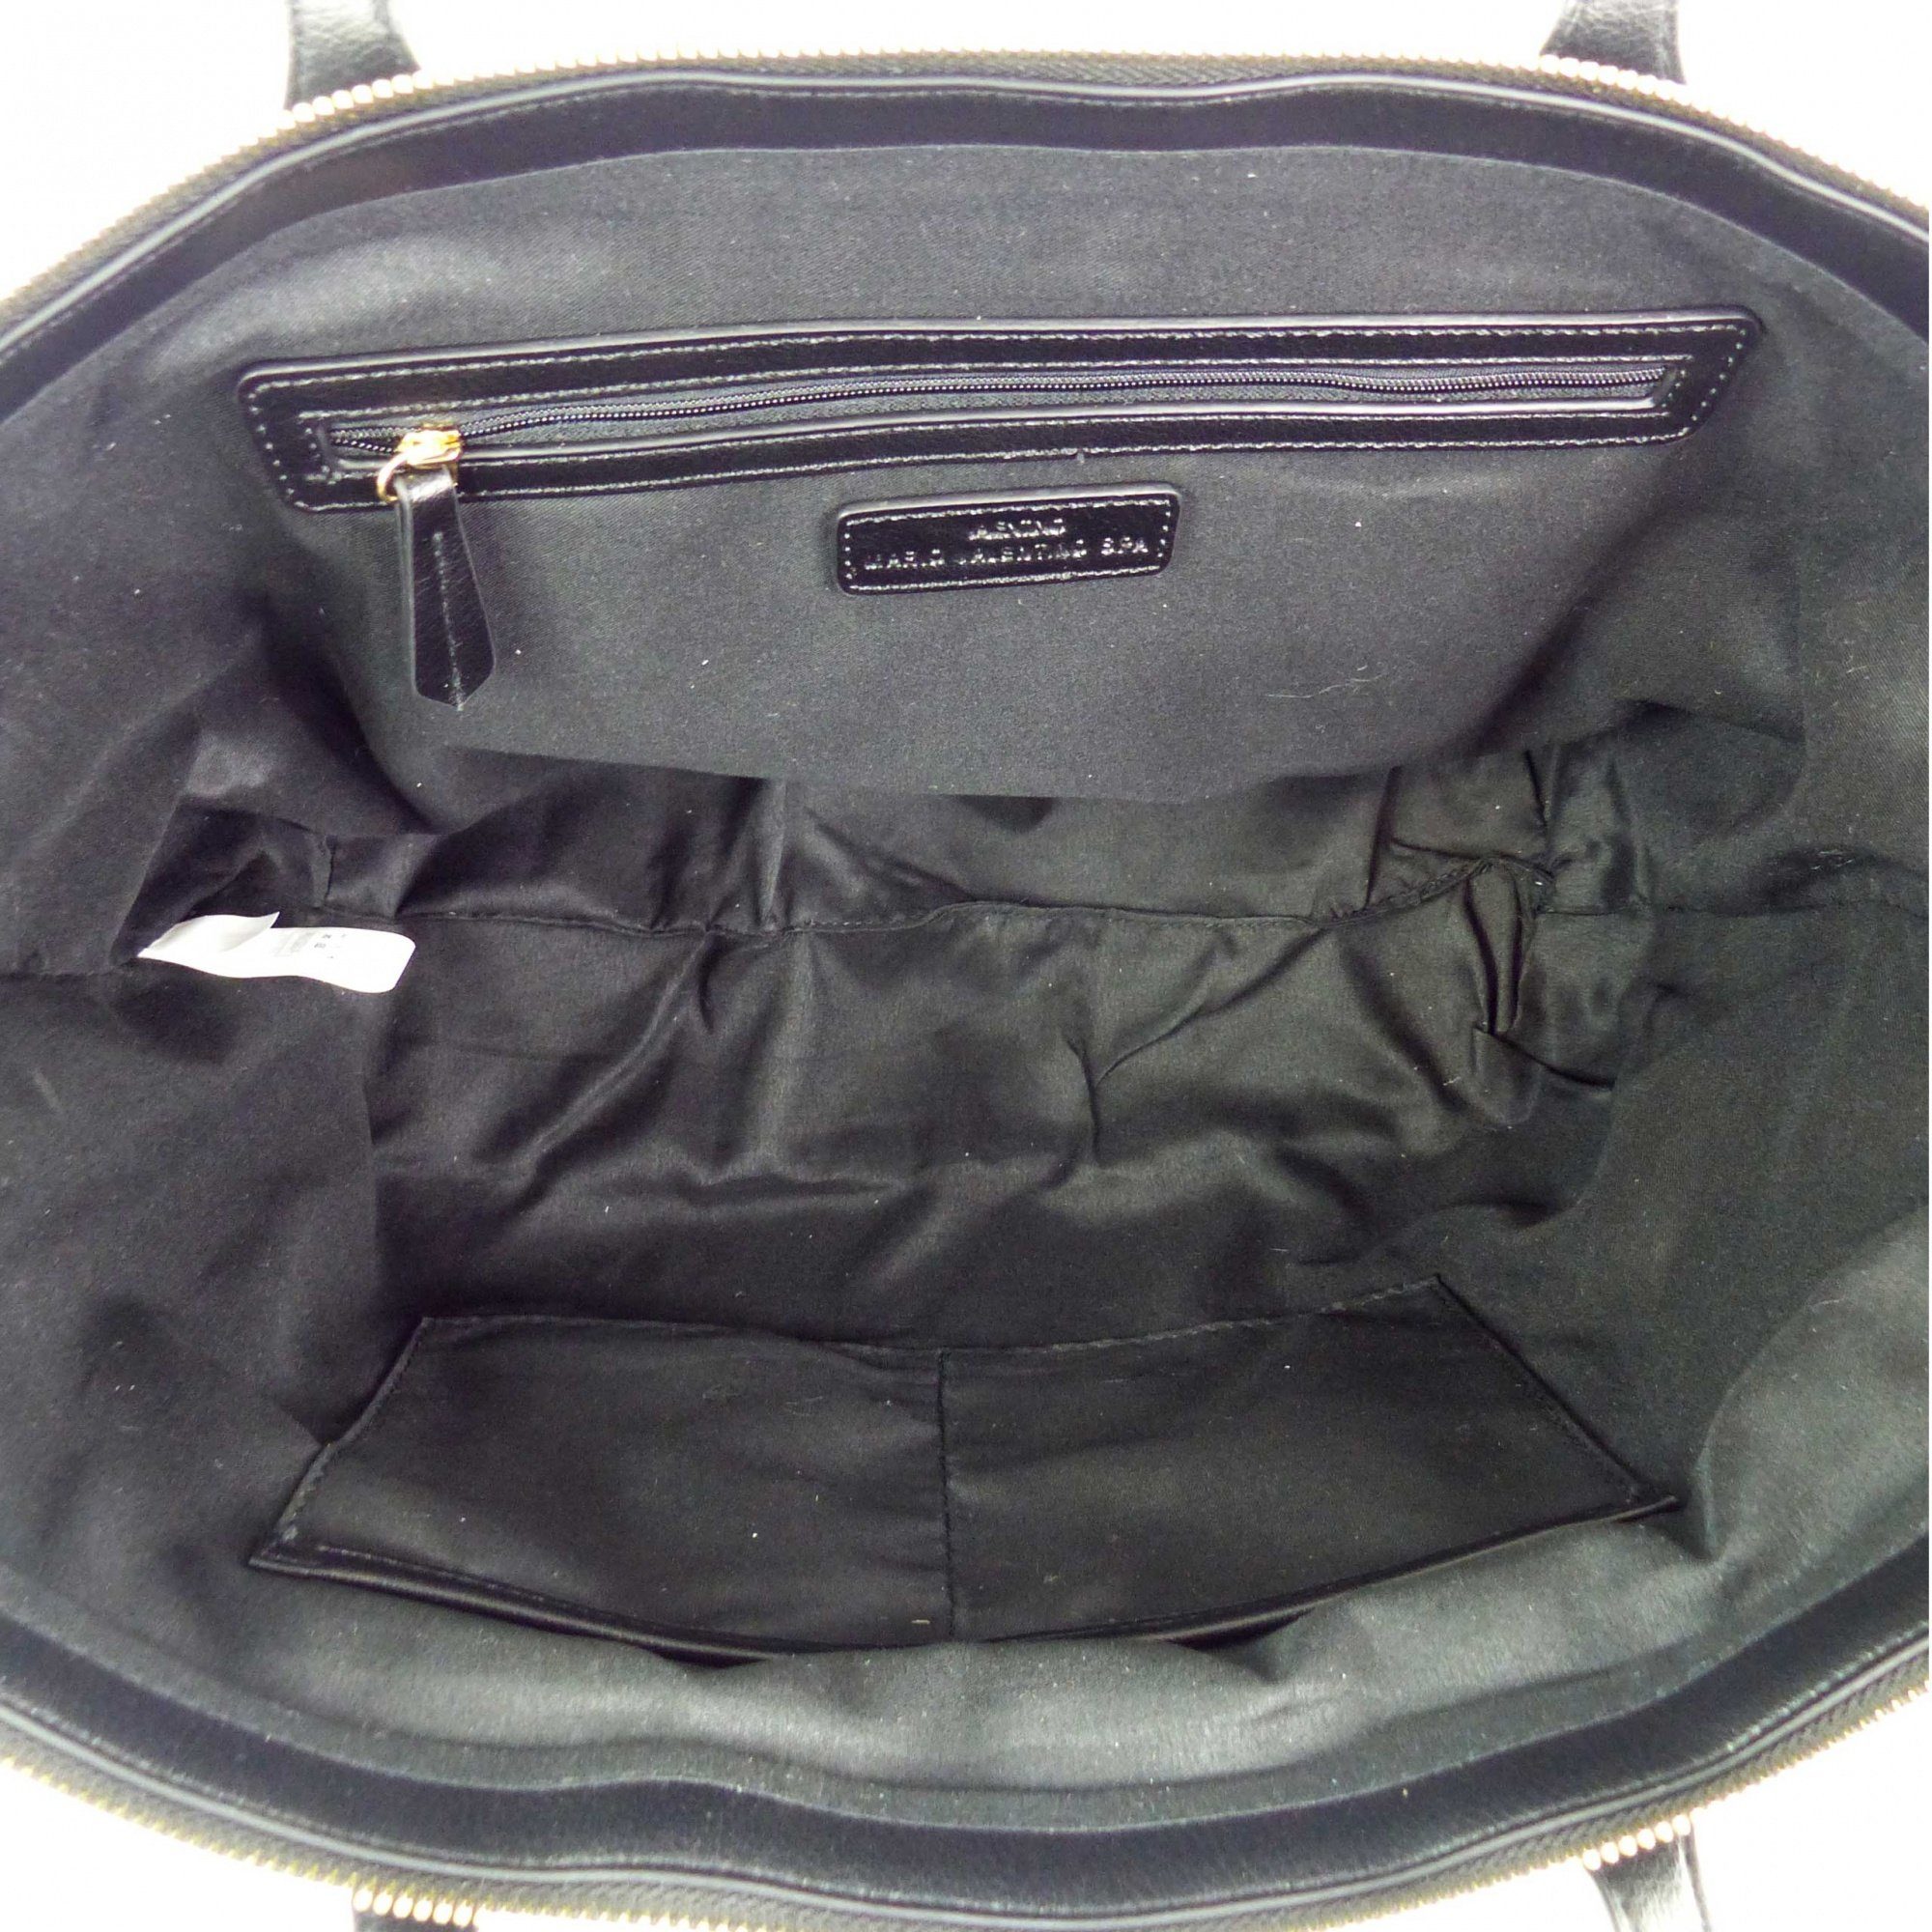 VBS6V701-Nero Re Palm BAGS VALENTINO Handtasche